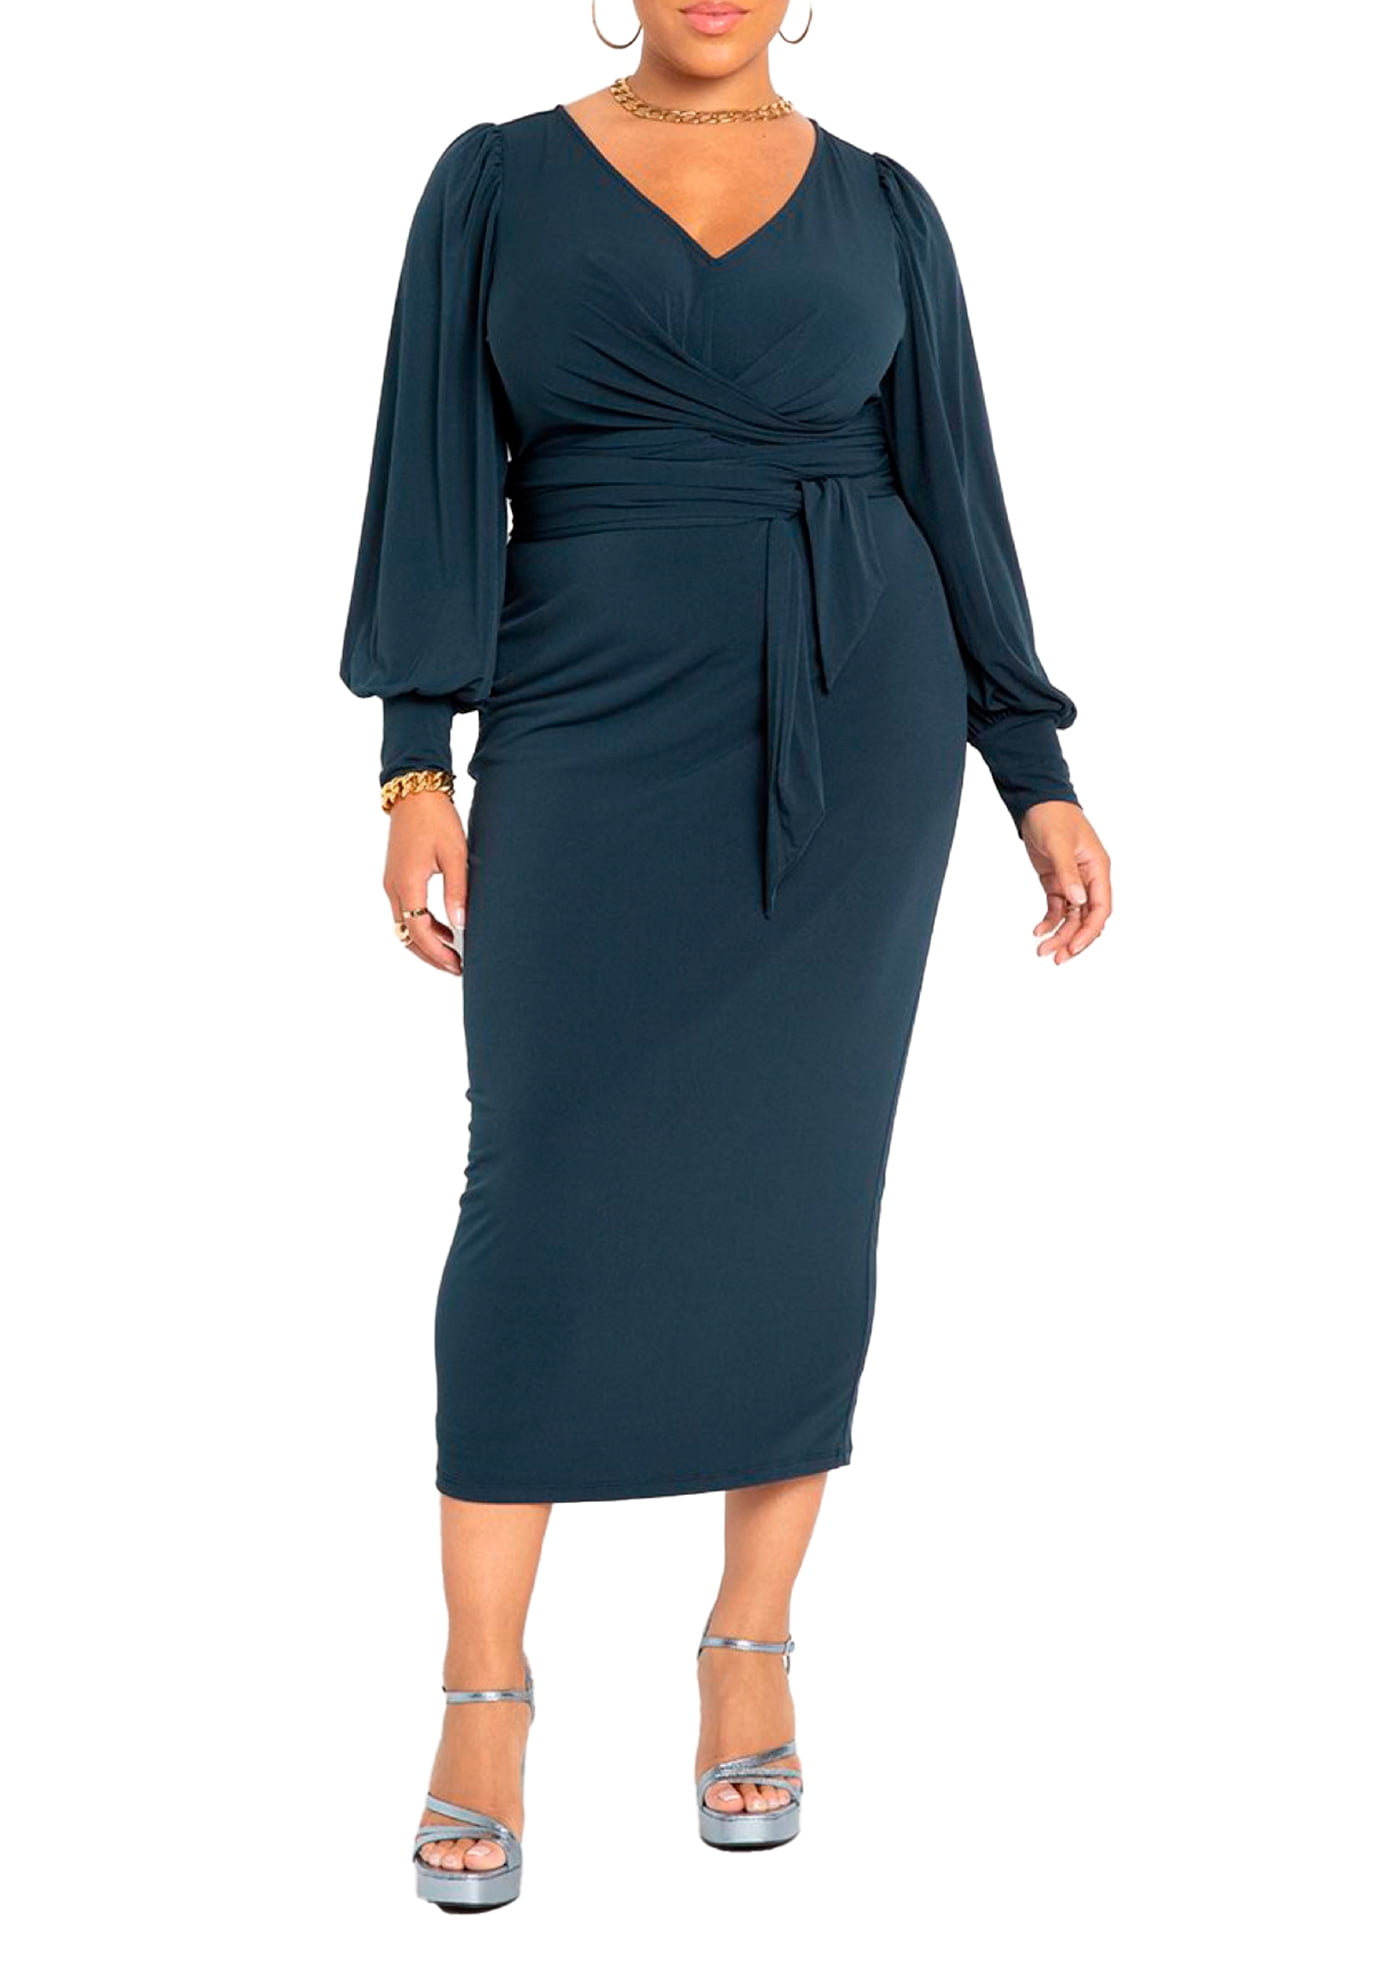 Eloquii Women's Plus Size Cross Front Midi Dress - Walmart.com